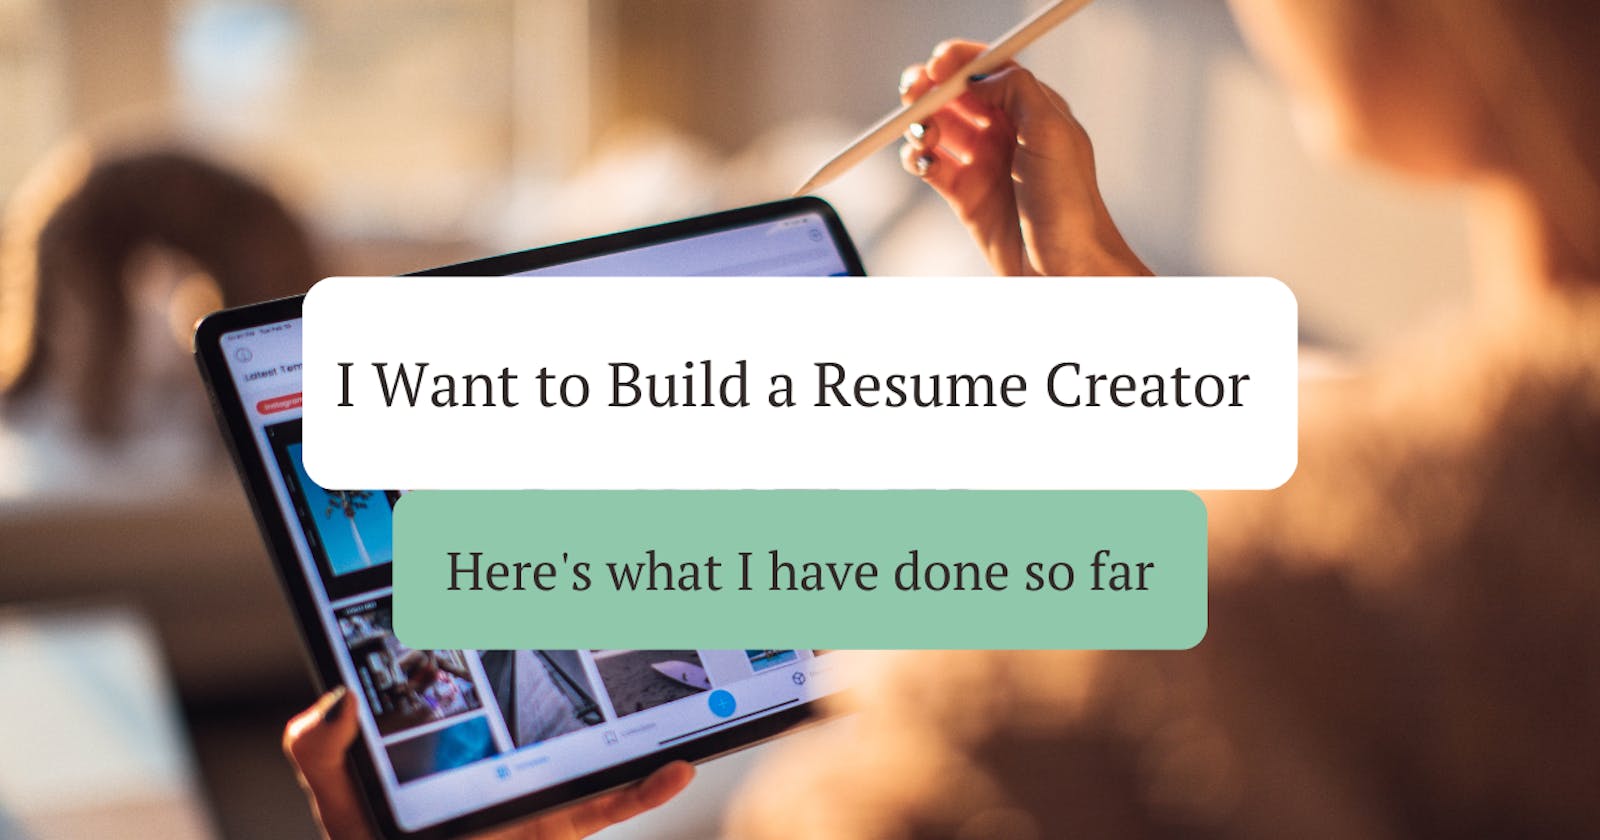 Building a Resume Creator